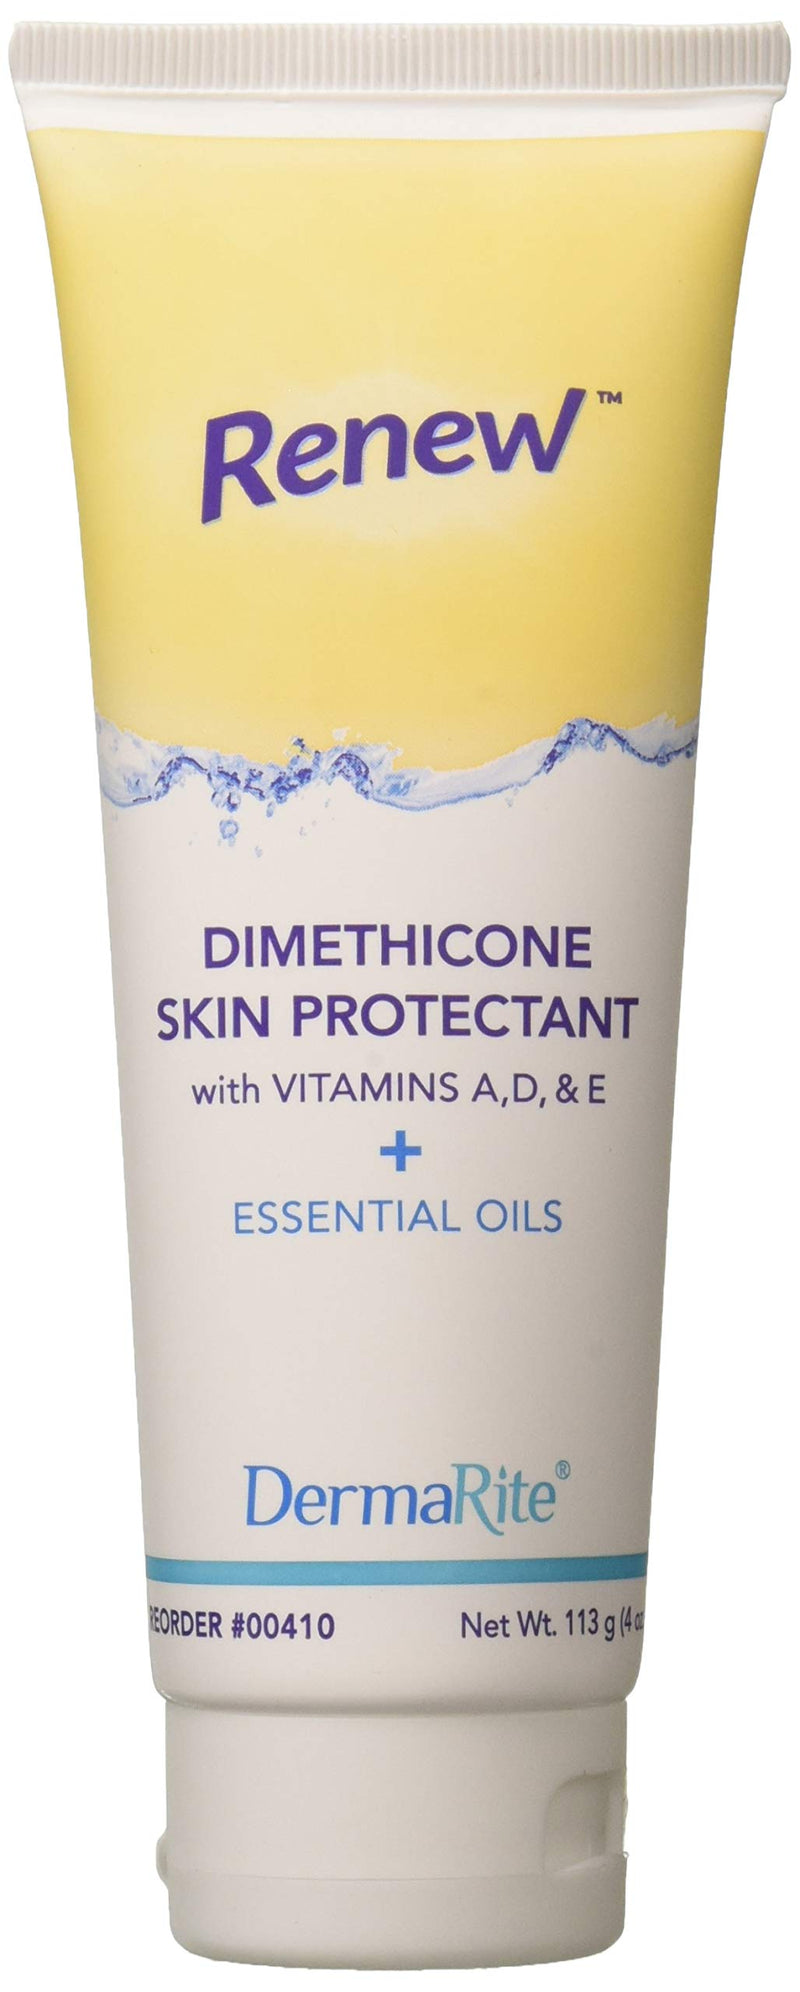 [Australia] - Dermarite Industries Renew Skin Protectant with Dimethazone 4oz Tube 